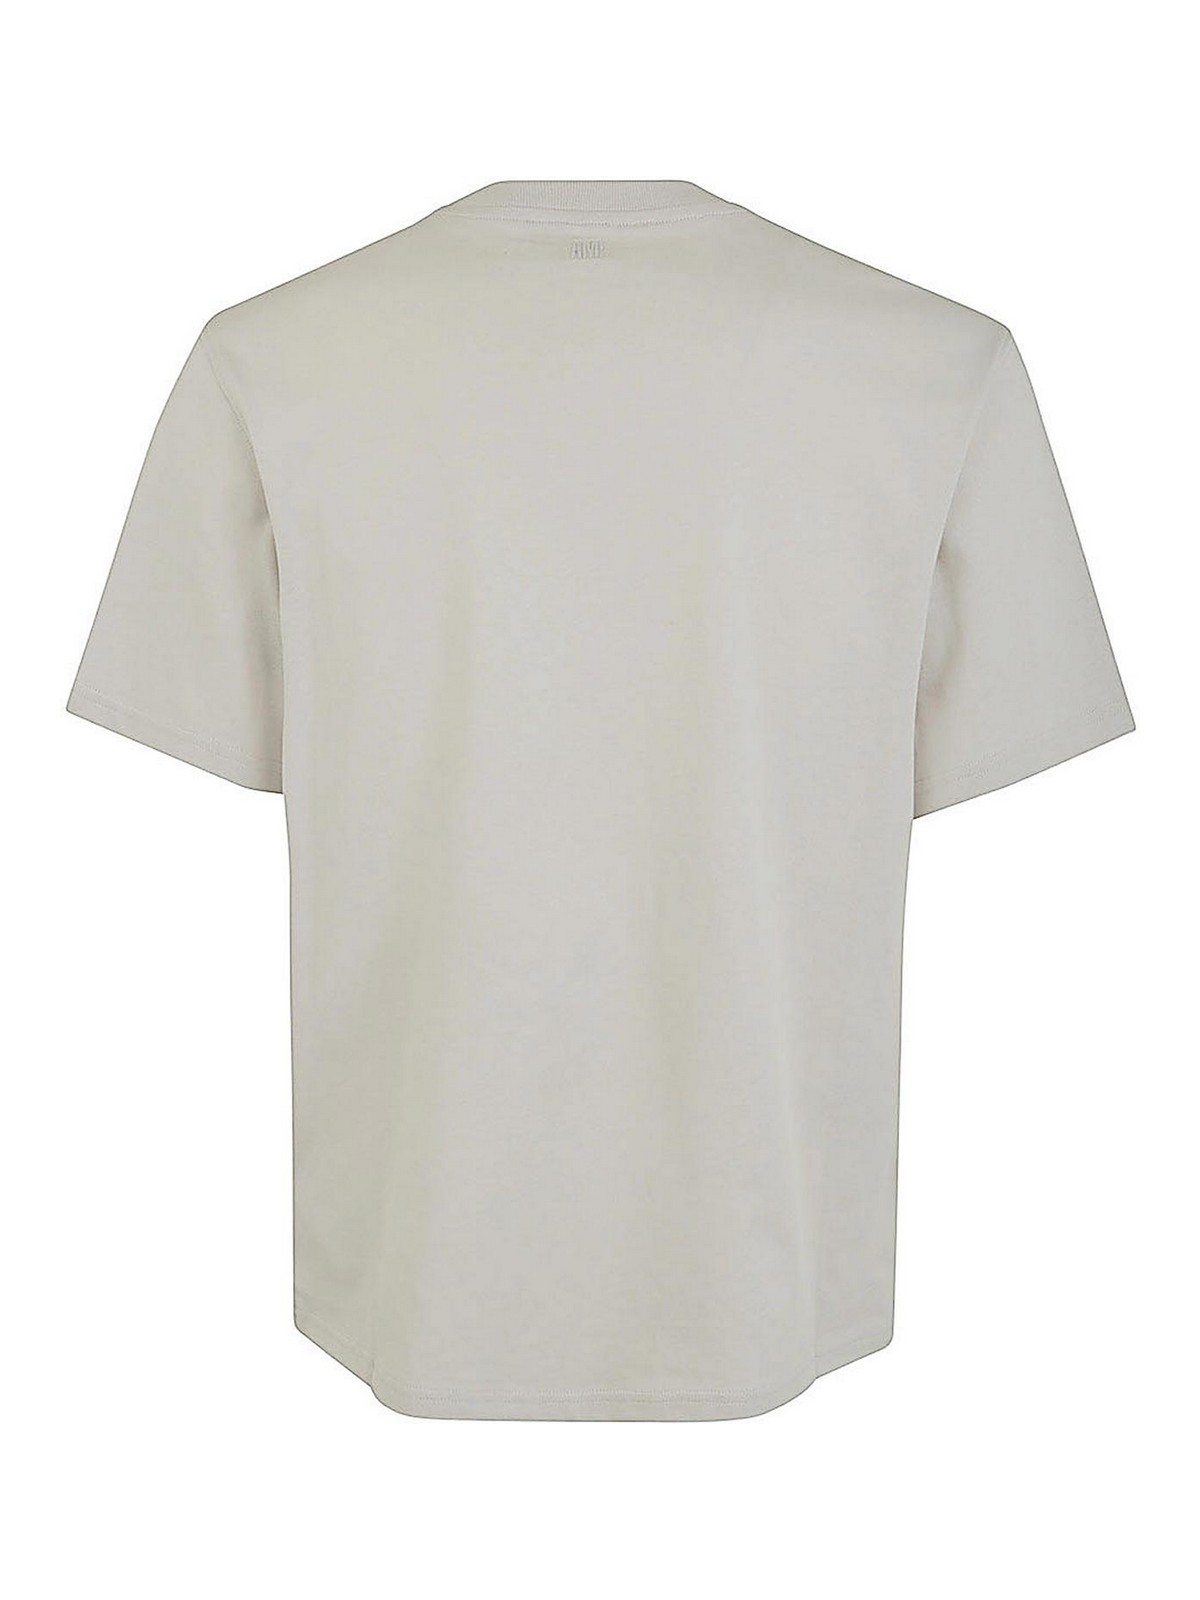 Shop Ami Alexandre Mattiussi Camiseta - Blanco In White